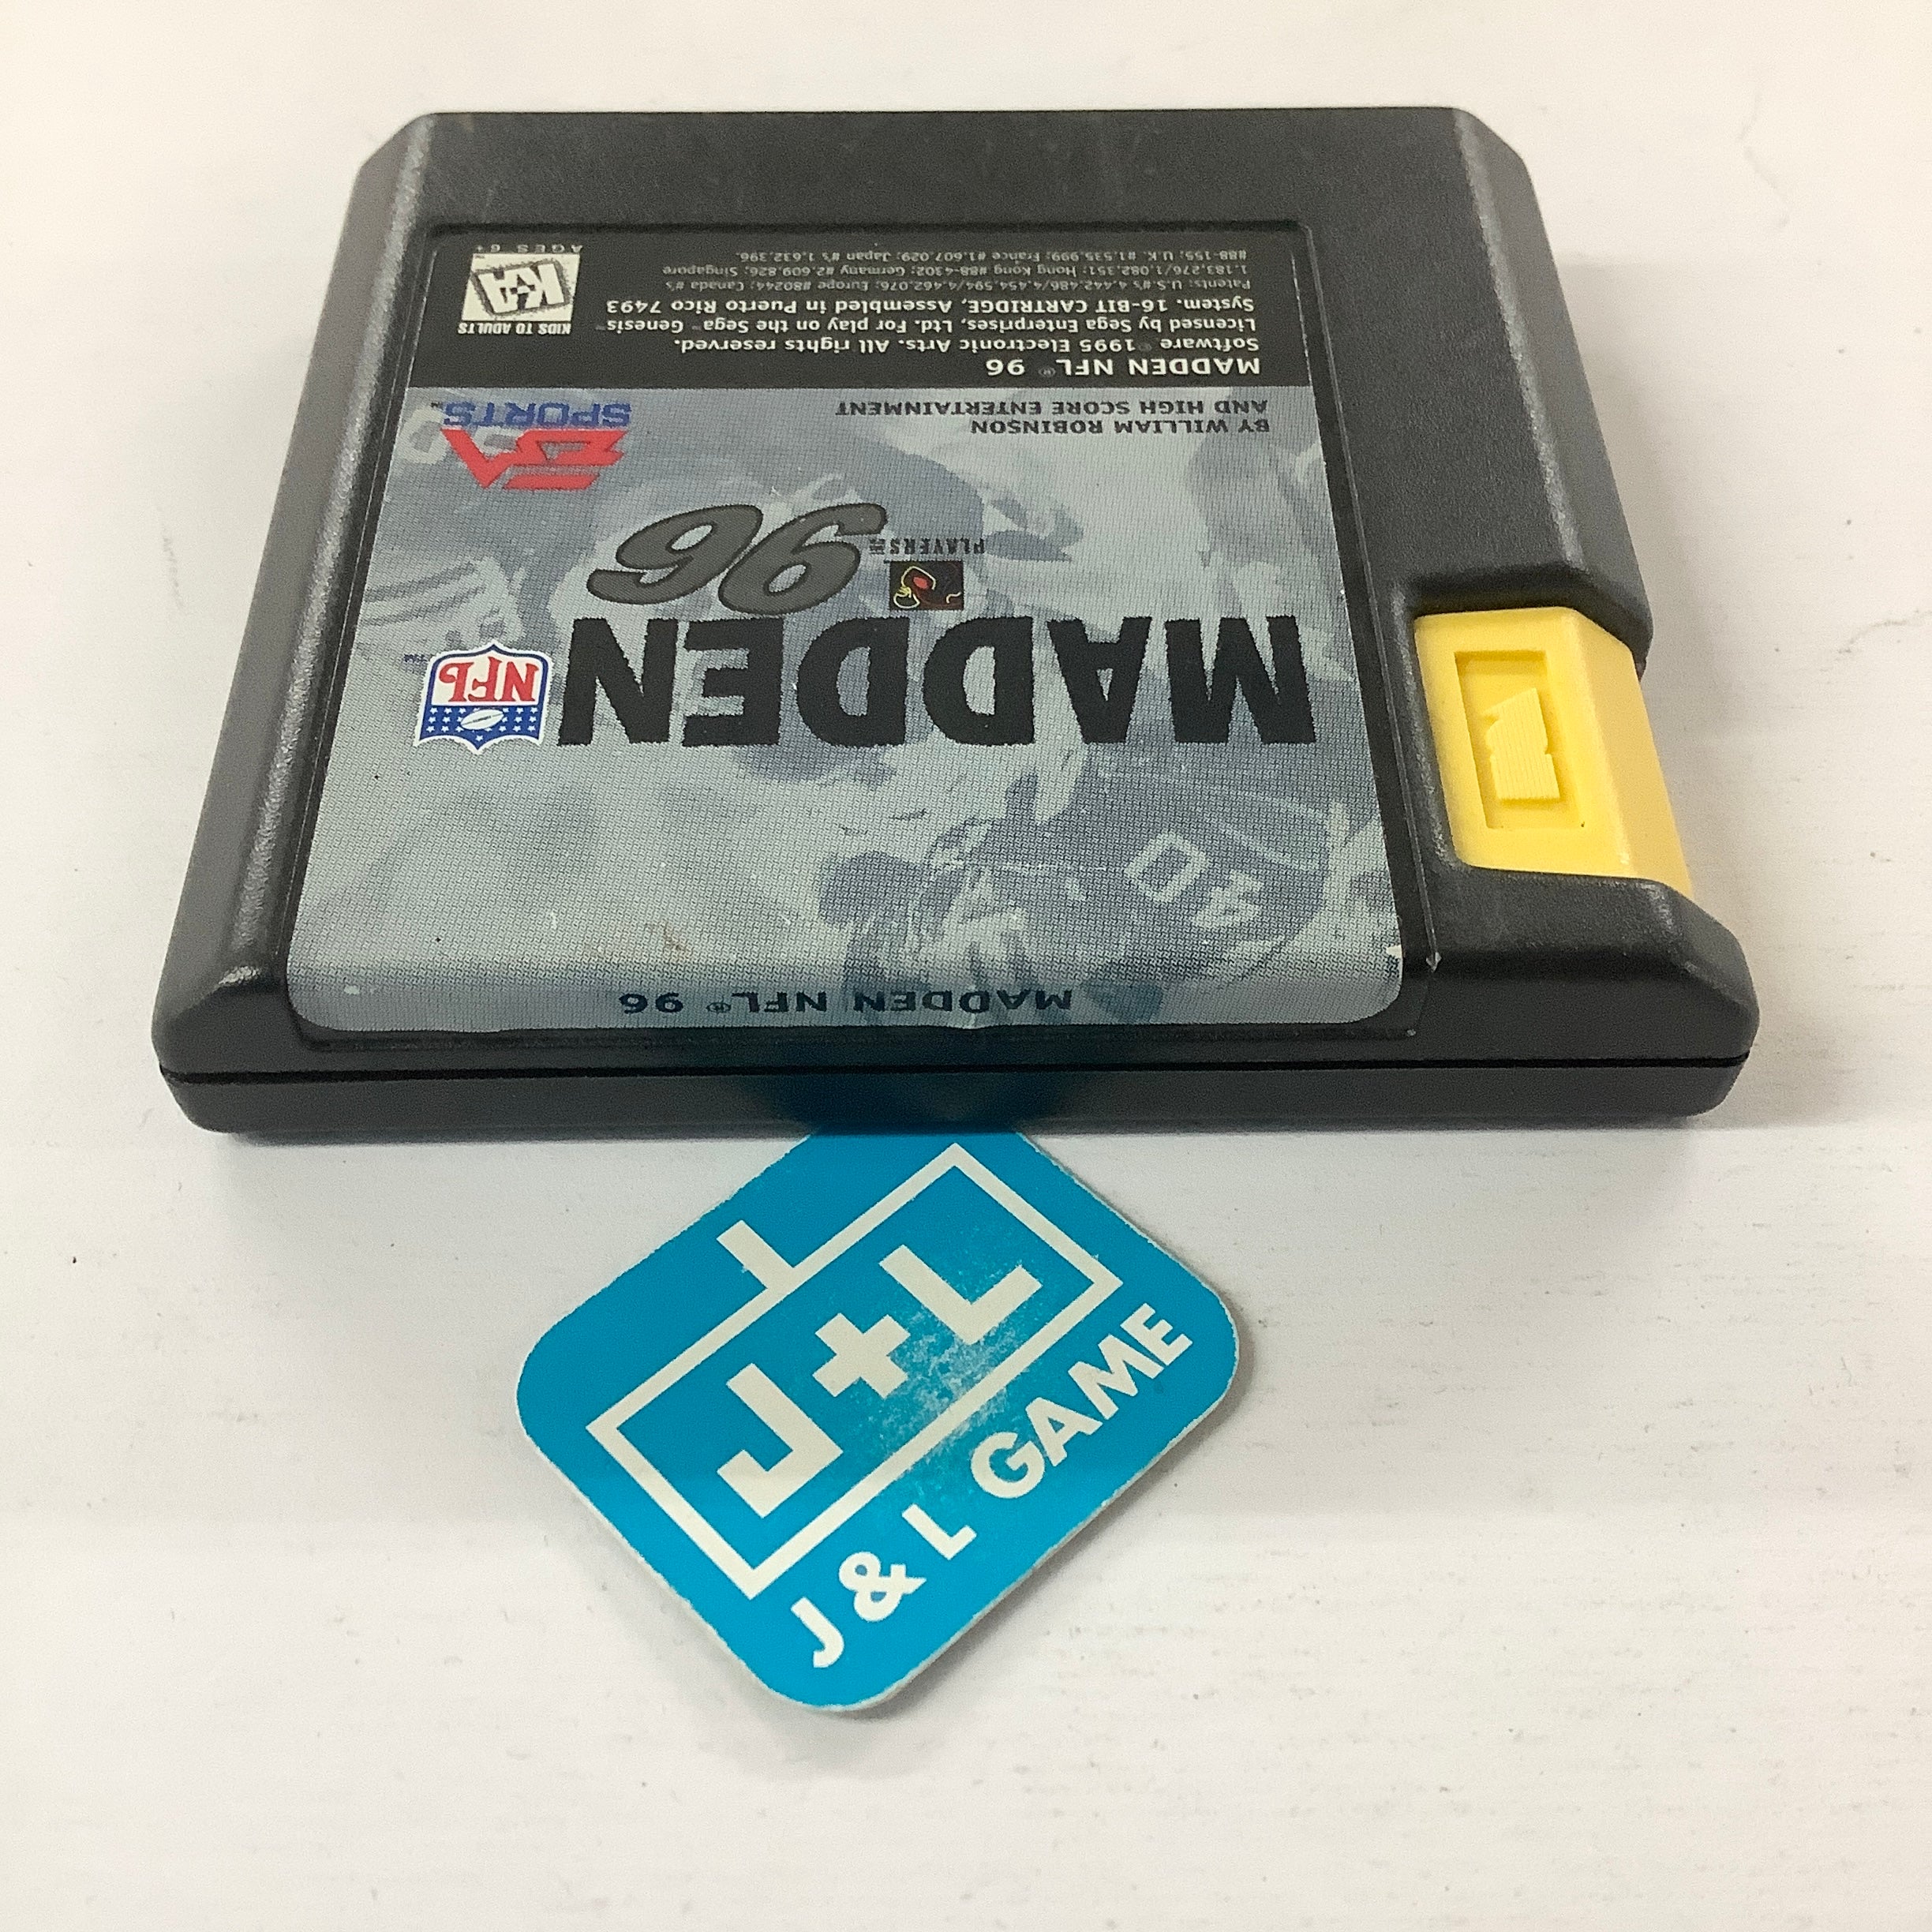 Madden NFL 96 - (SG) SEGA Genesis [Pre-Owned] Video Games EA Sports   